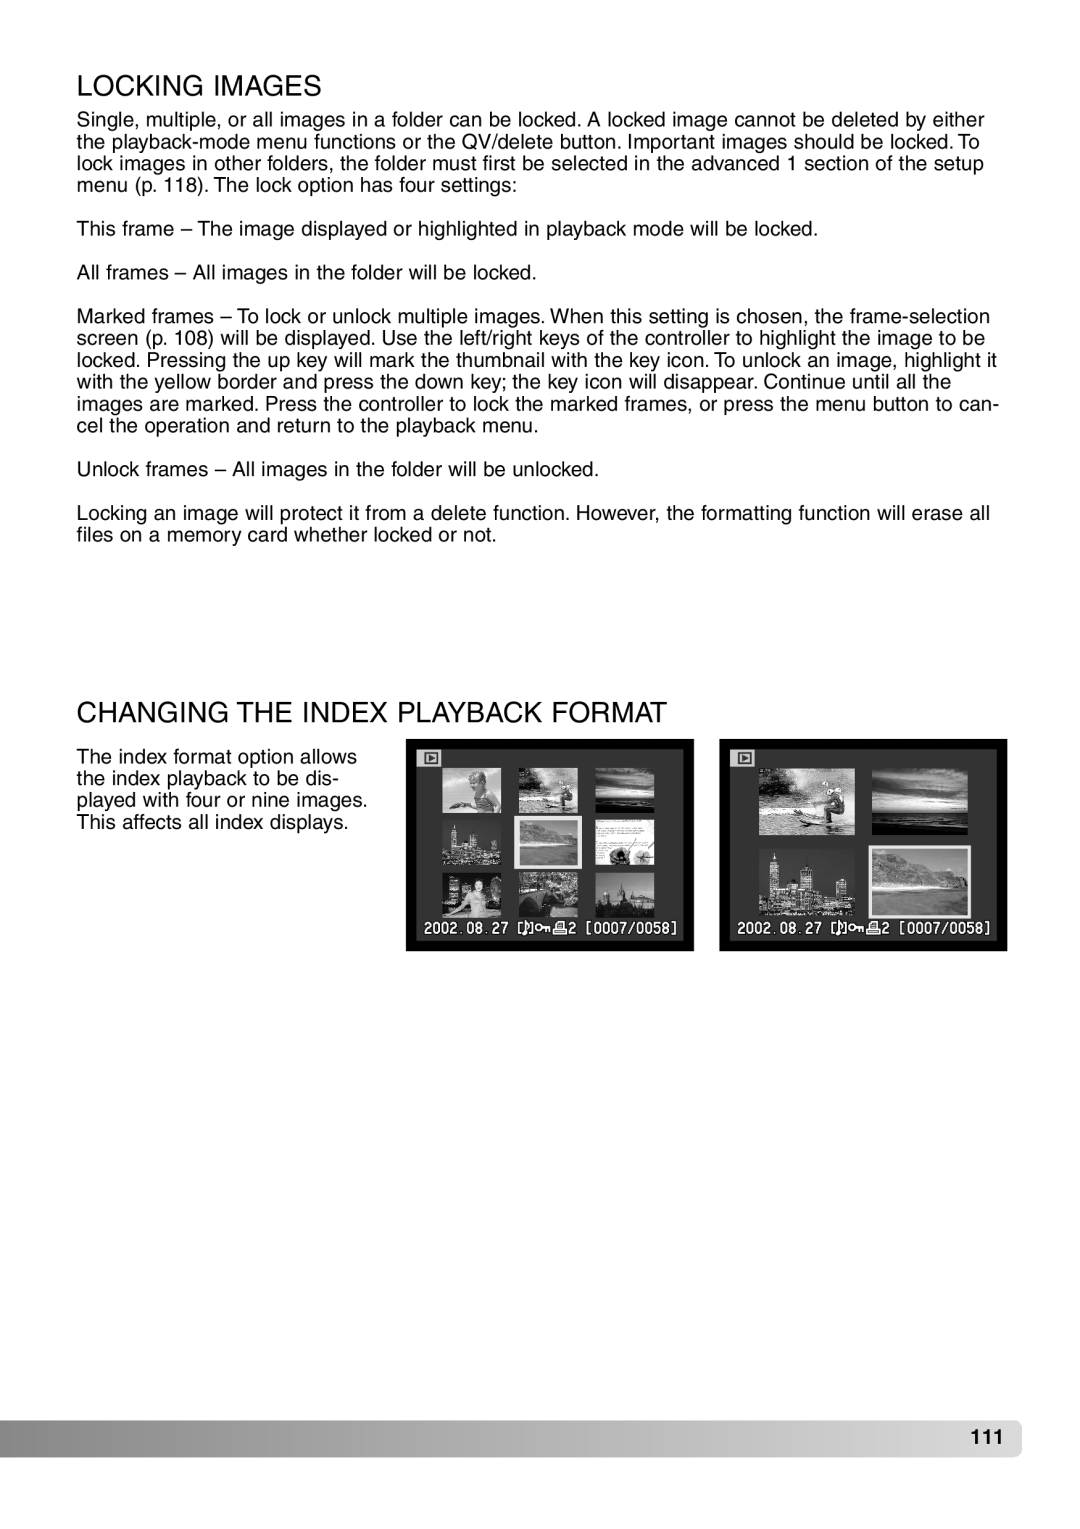 Konica Minolta 7Hi instruction manual Locking Images, Changing the Index Playback Format 